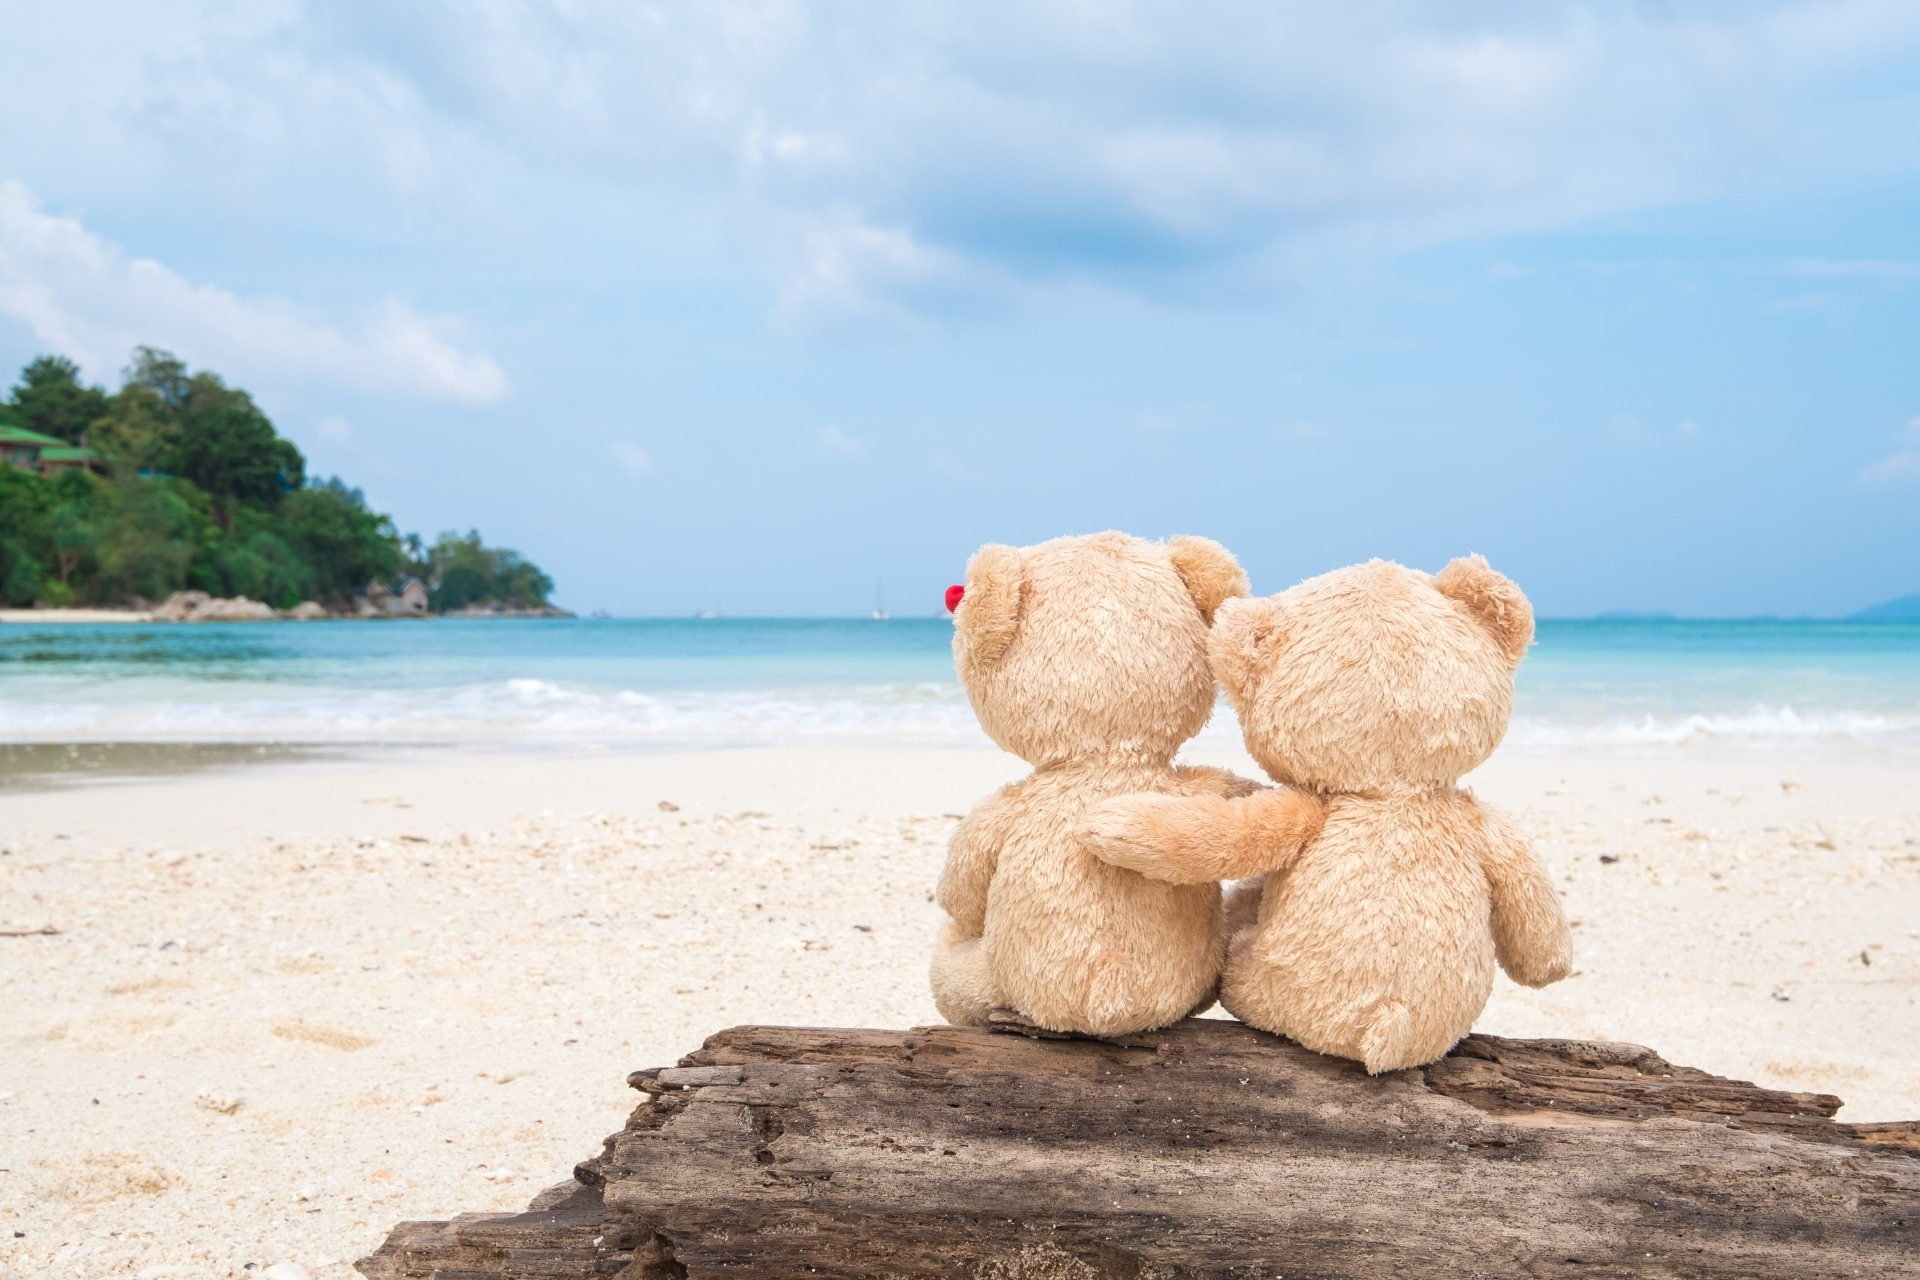 Man Made, Stuffed Animal, Beach, Love, Teddy Bear, sky, water